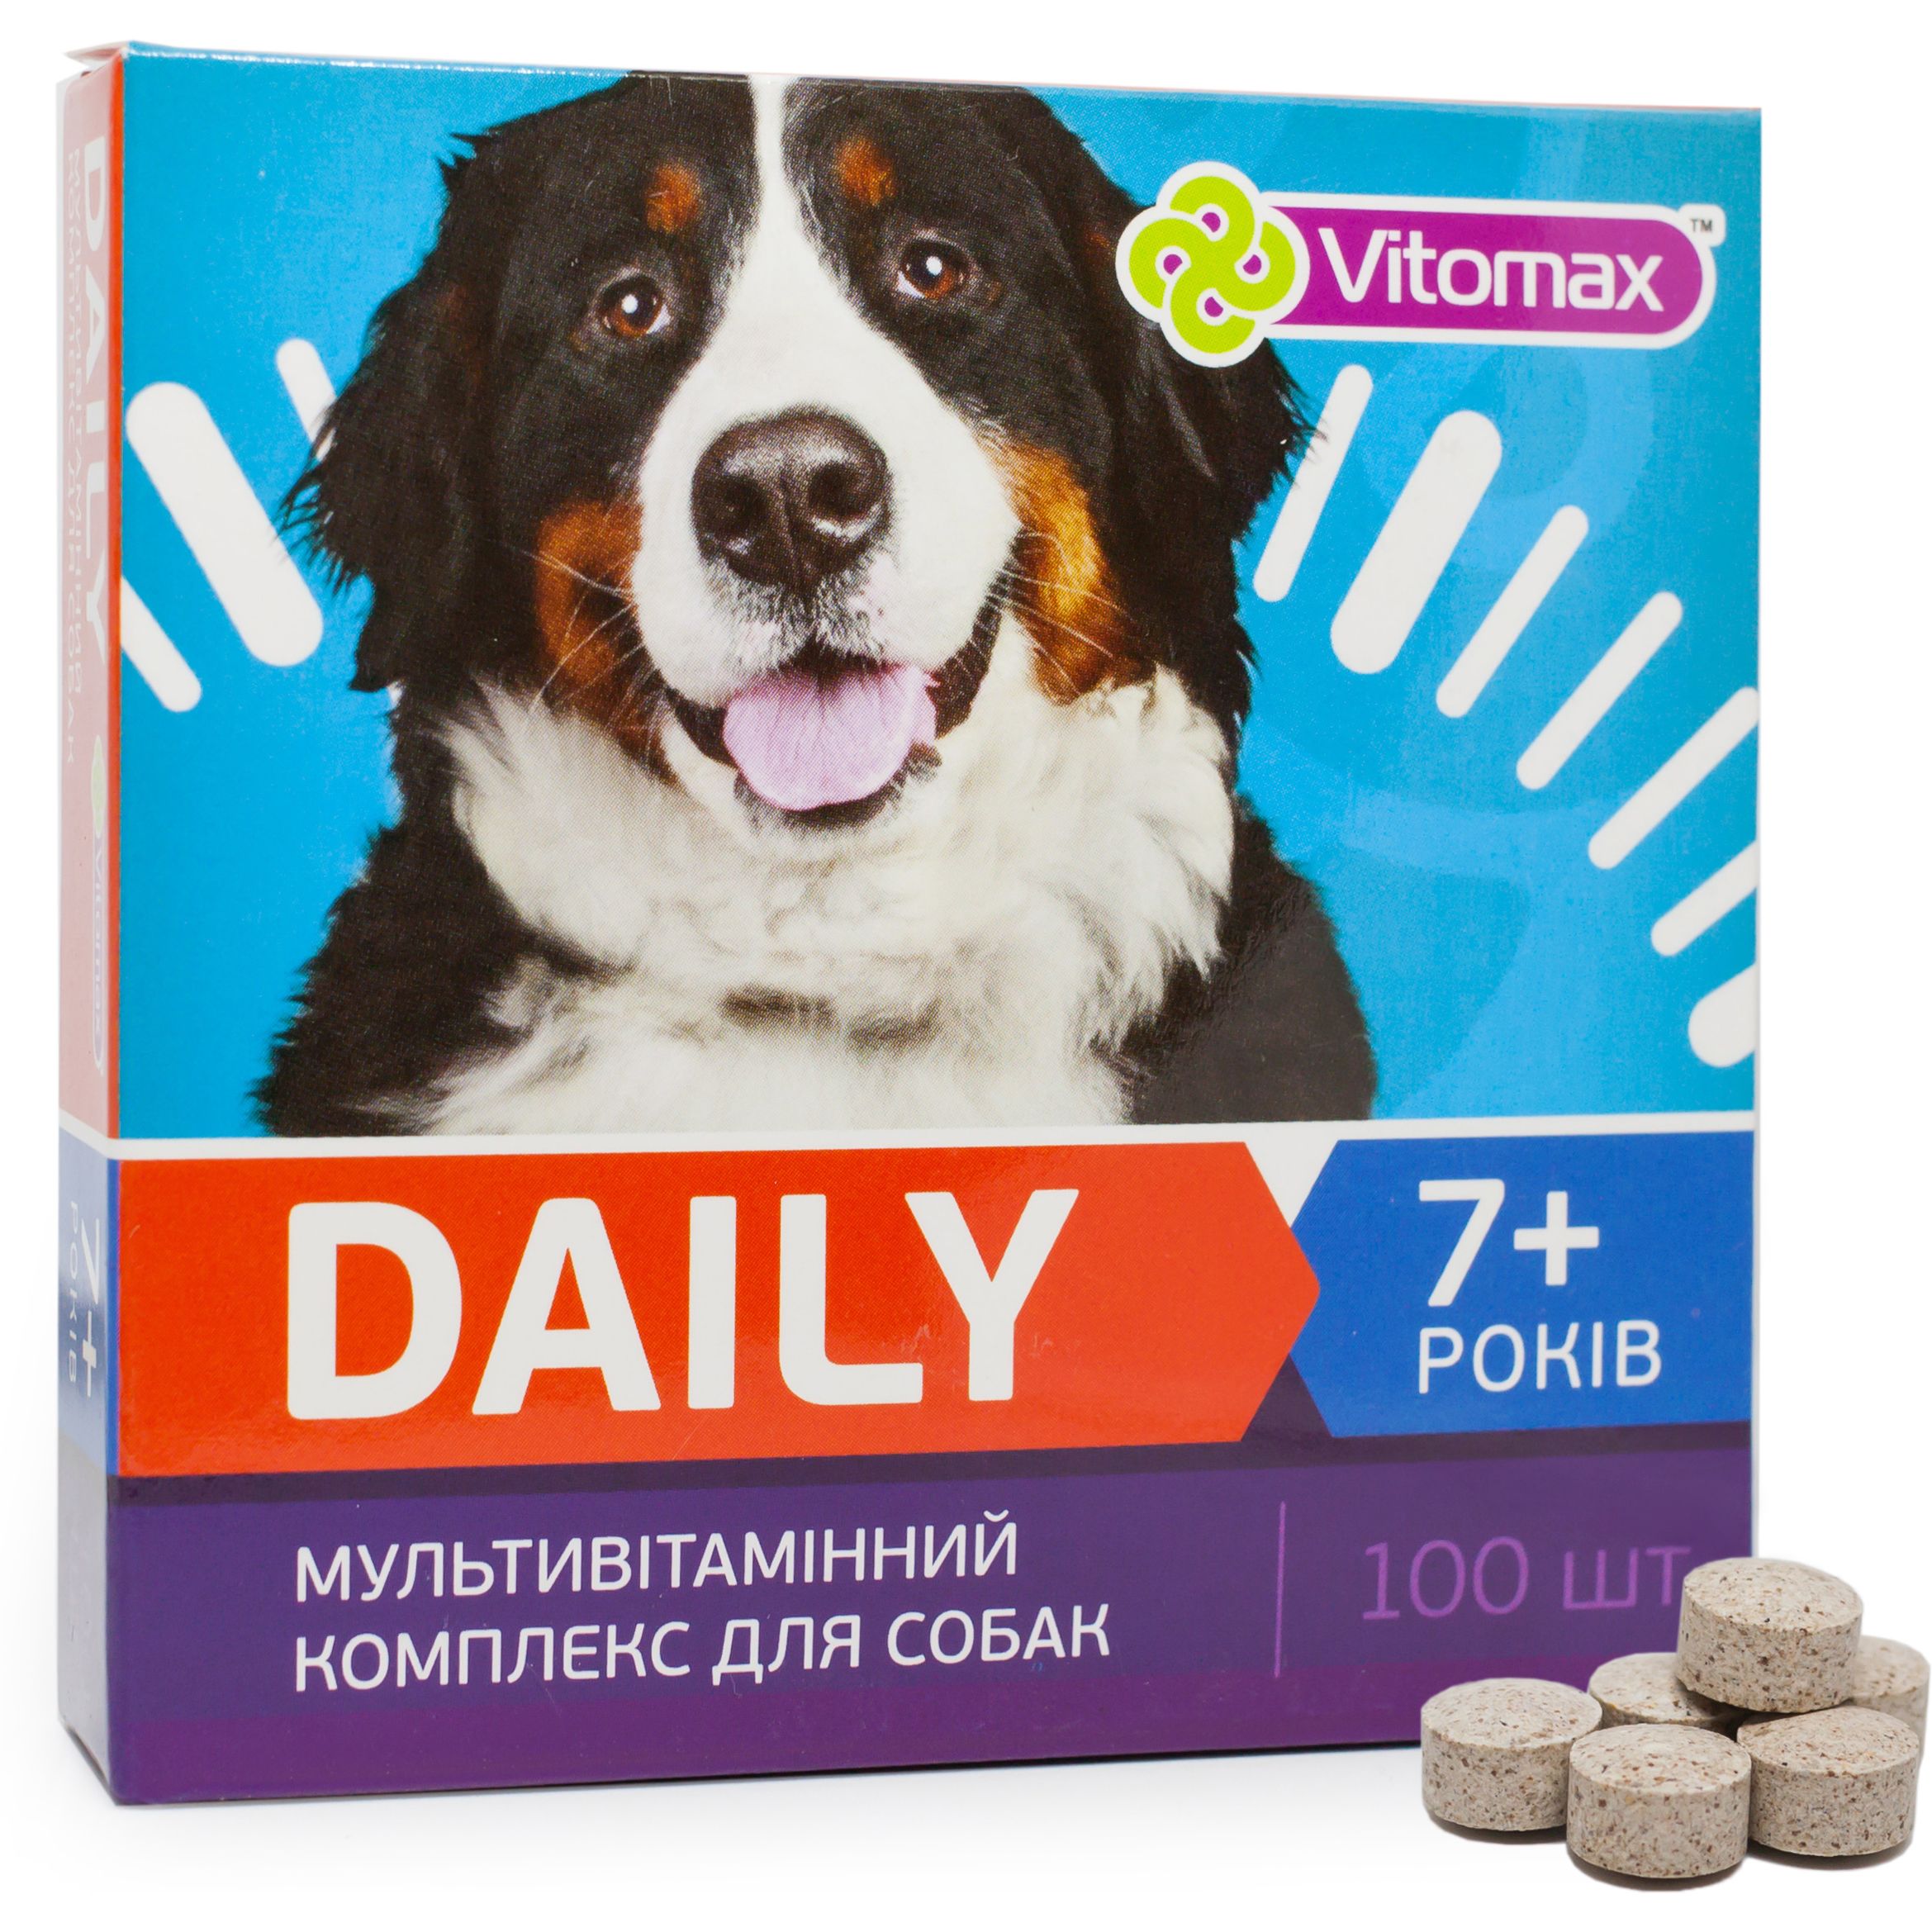 Мультивитаминный комплекс Vitomax Daily для собак 7+ лет, 100 таблеток - фото 2